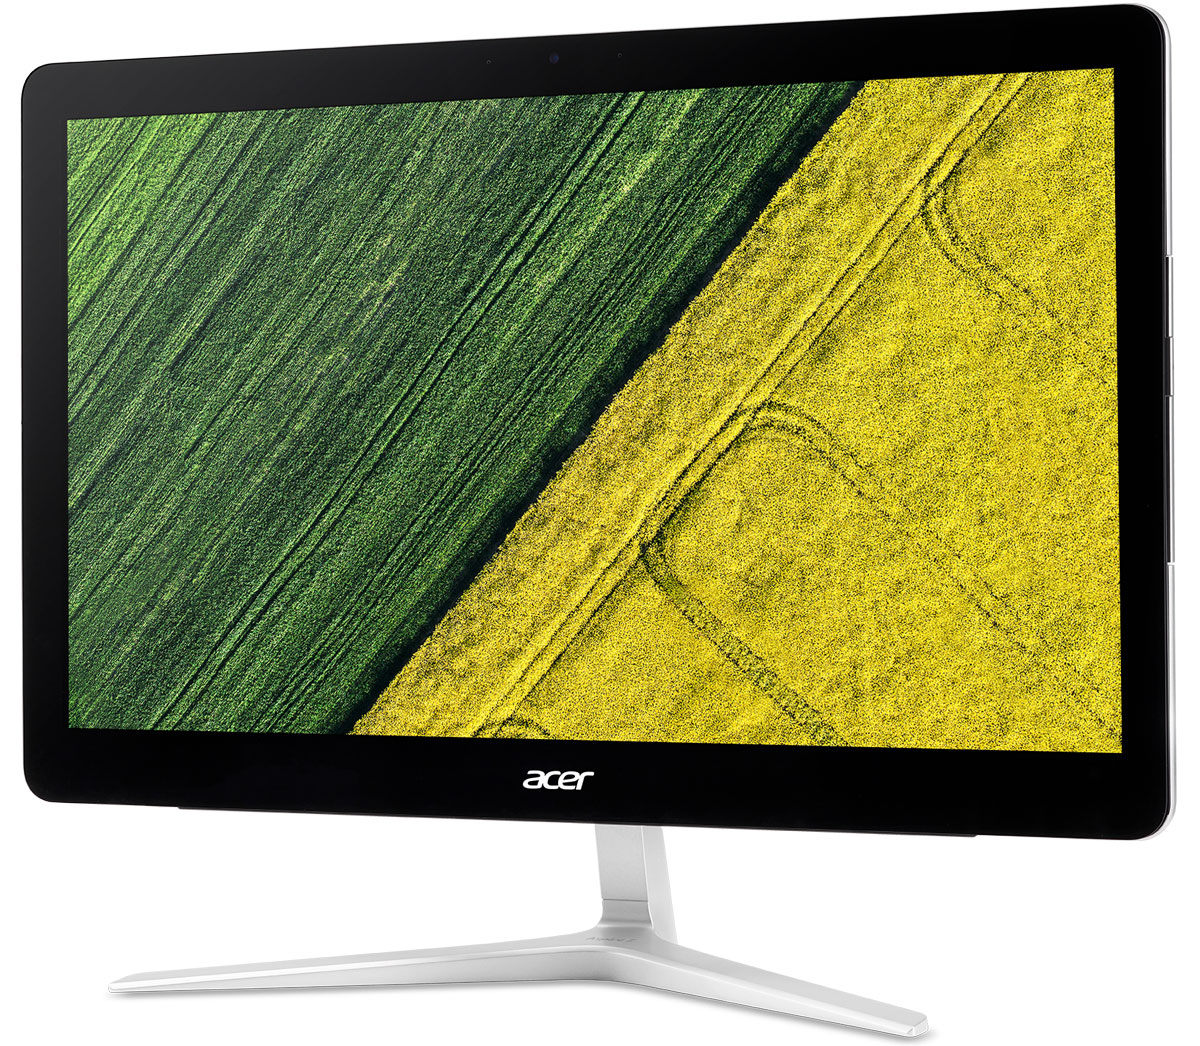 Acer Aspire Z24-880, Silver  (DQ.B8TER.016)DQ.B8TER.016    Acer Aspire Z24-880     ,      .            V-  .      ,      .  Dolby Audio Premium        .             -     .  Aspire Z24      .  Full HD 1080p         . Intel Optane -    ,               .          -   . Acer BlueLightShield  Flickerless          .    .  EAC       .